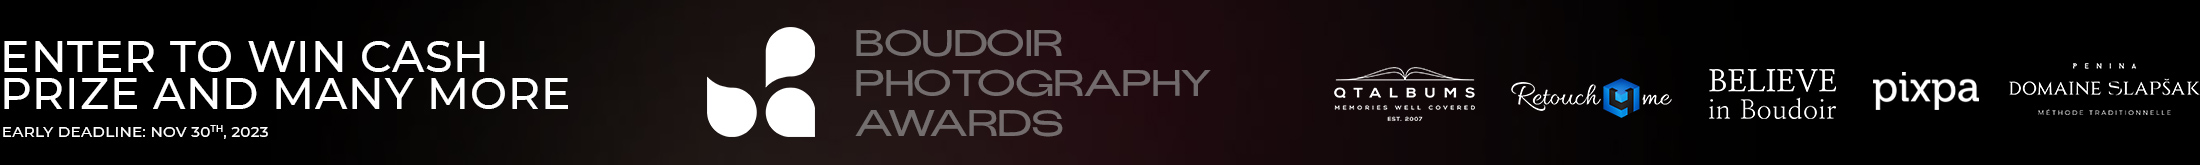 Boudoir Photography Awards 2022